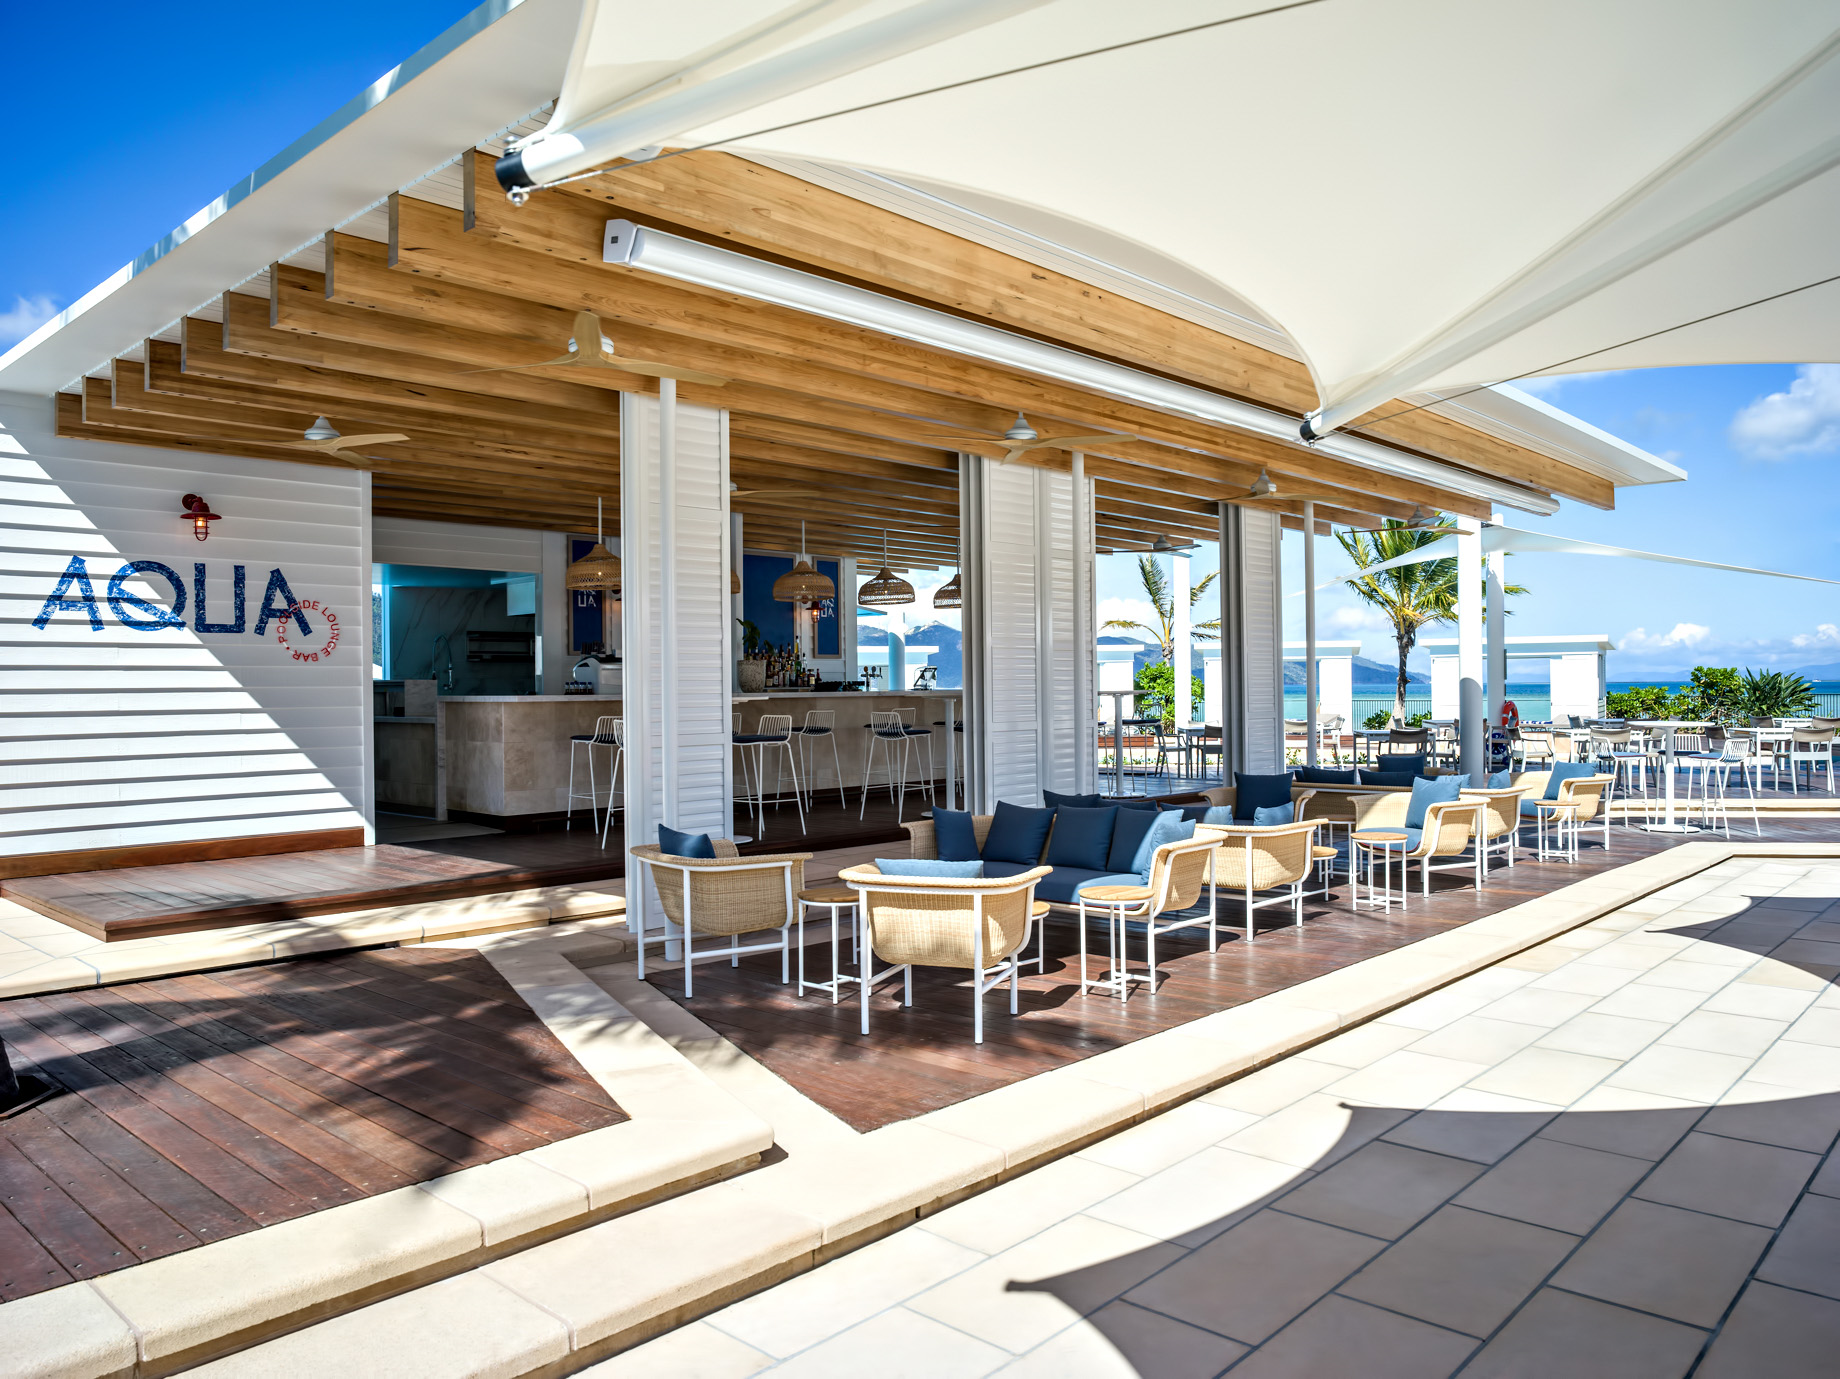 InterContinental Hayman Island Resort – Whitsunday Islands, Australia – Aqua Restaurant Patio